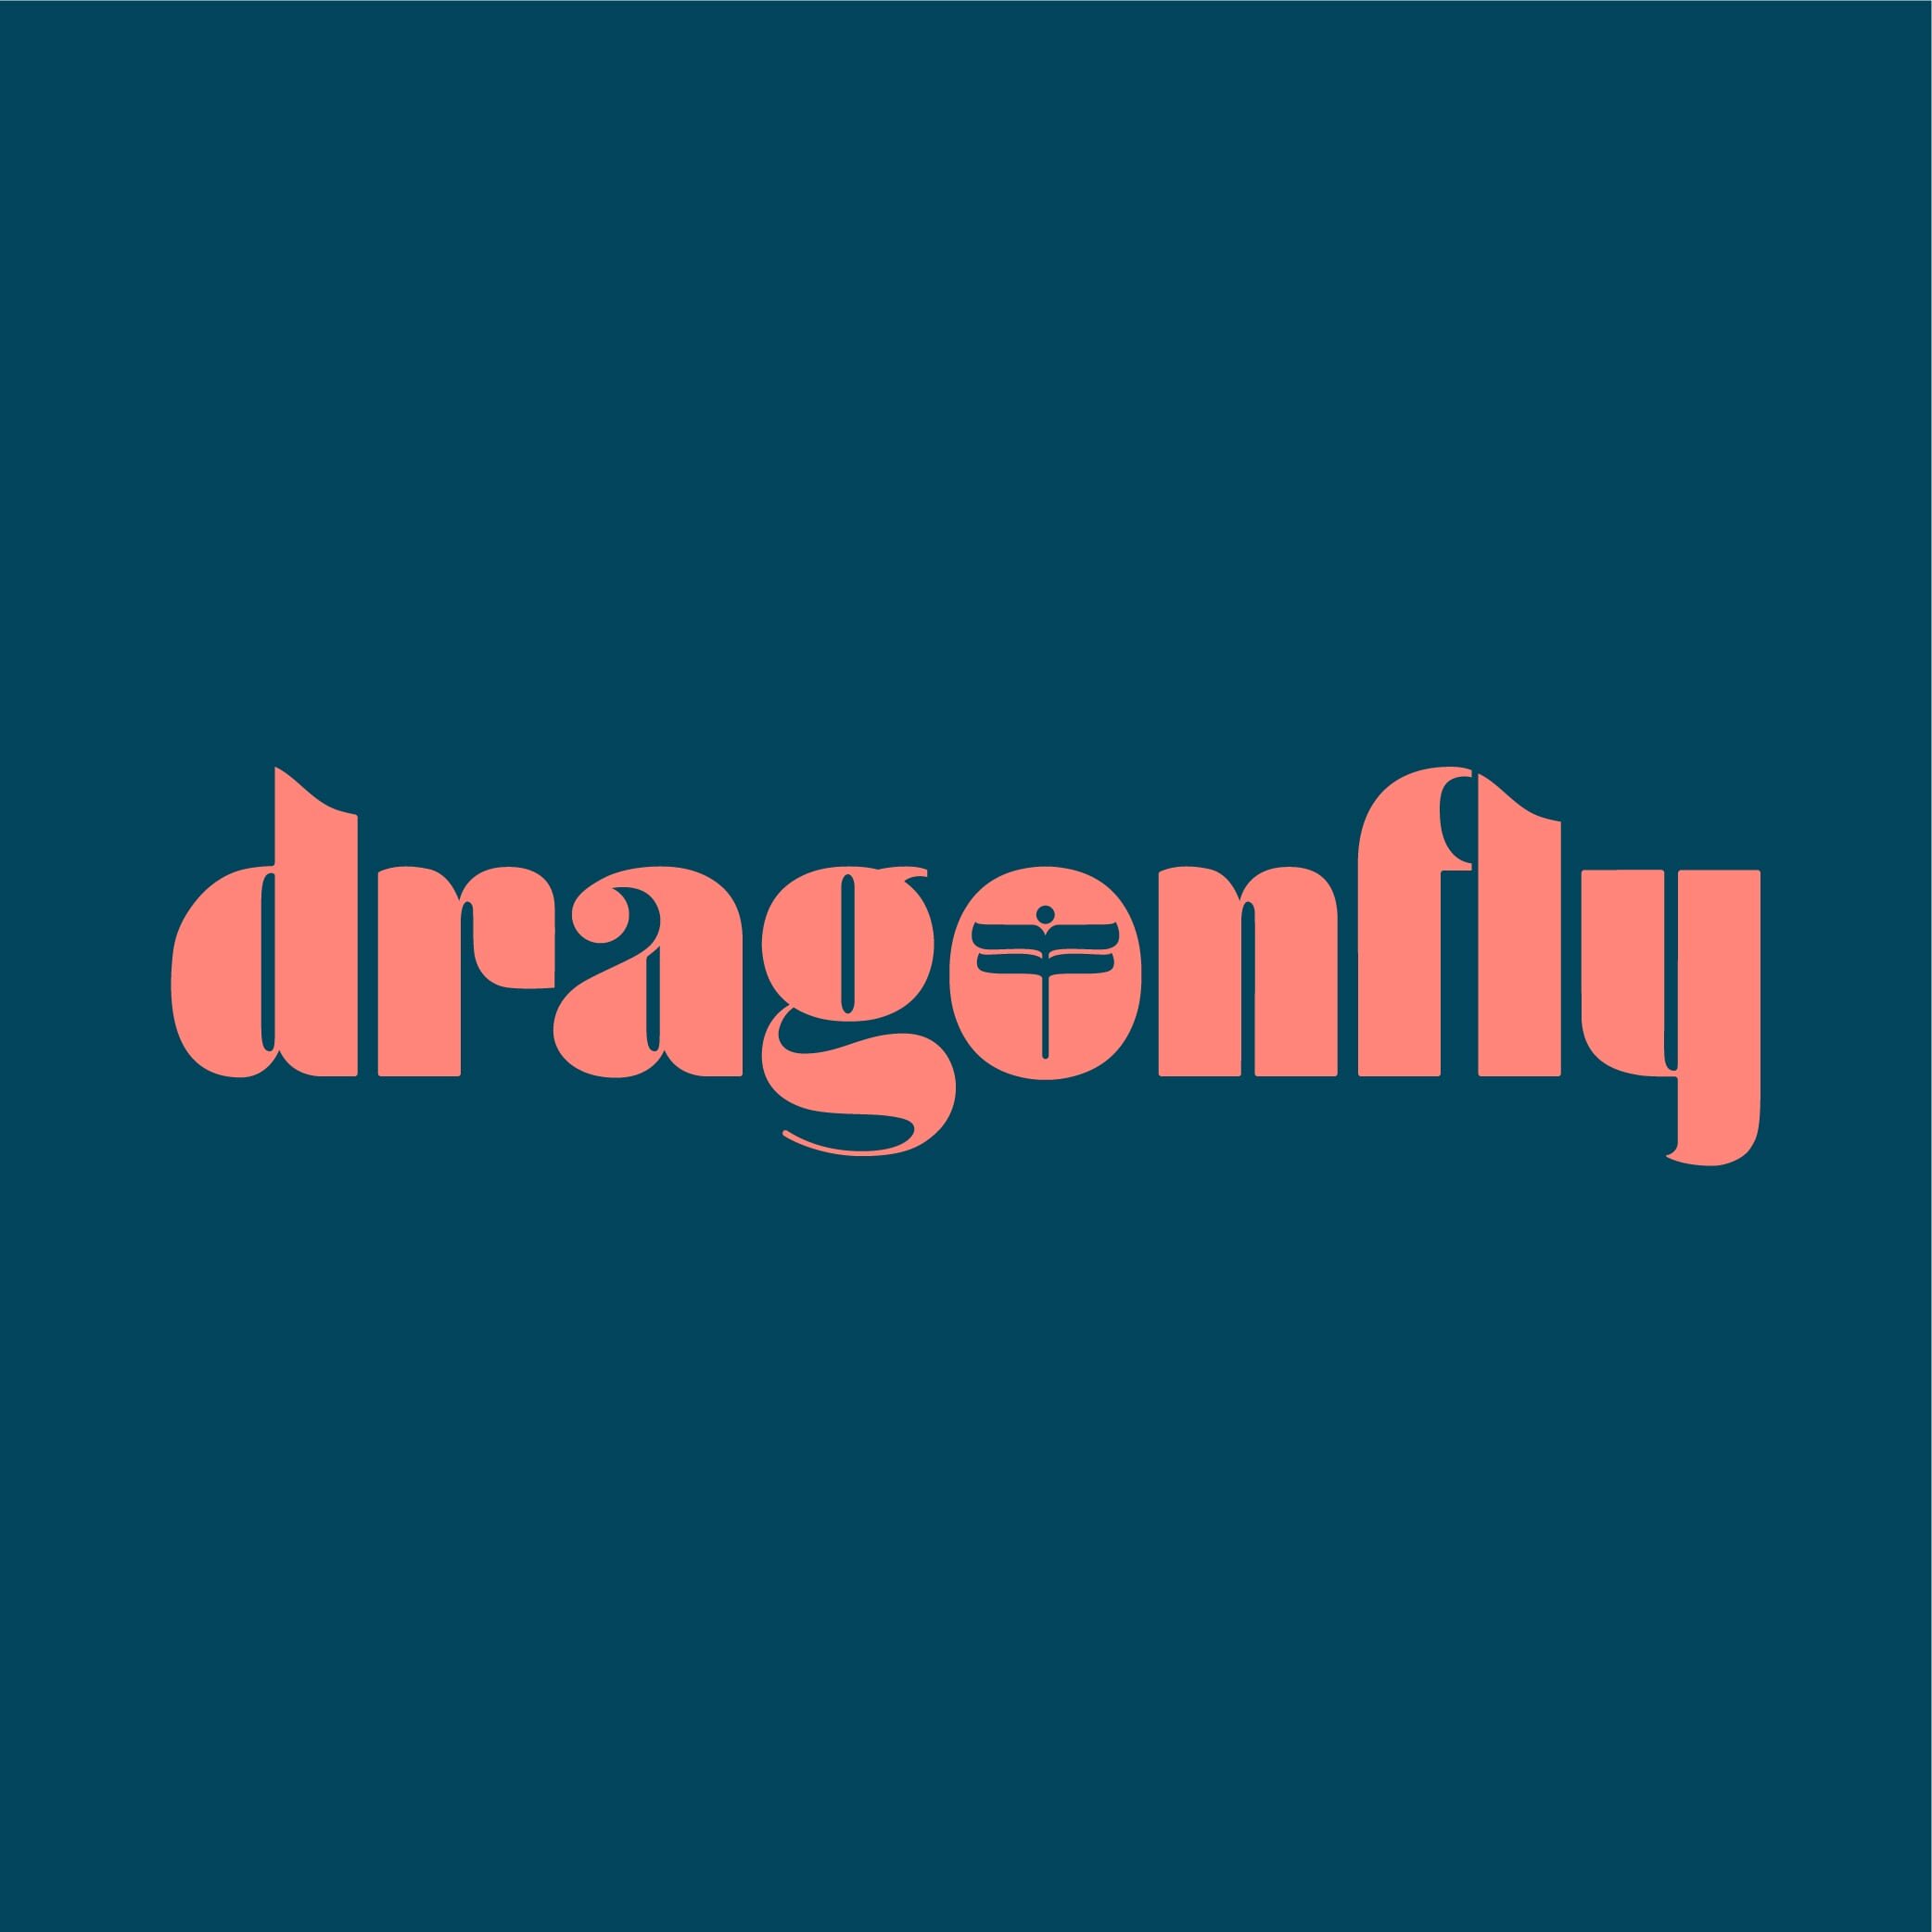 DF_logotype_dragonfly_6.jpg